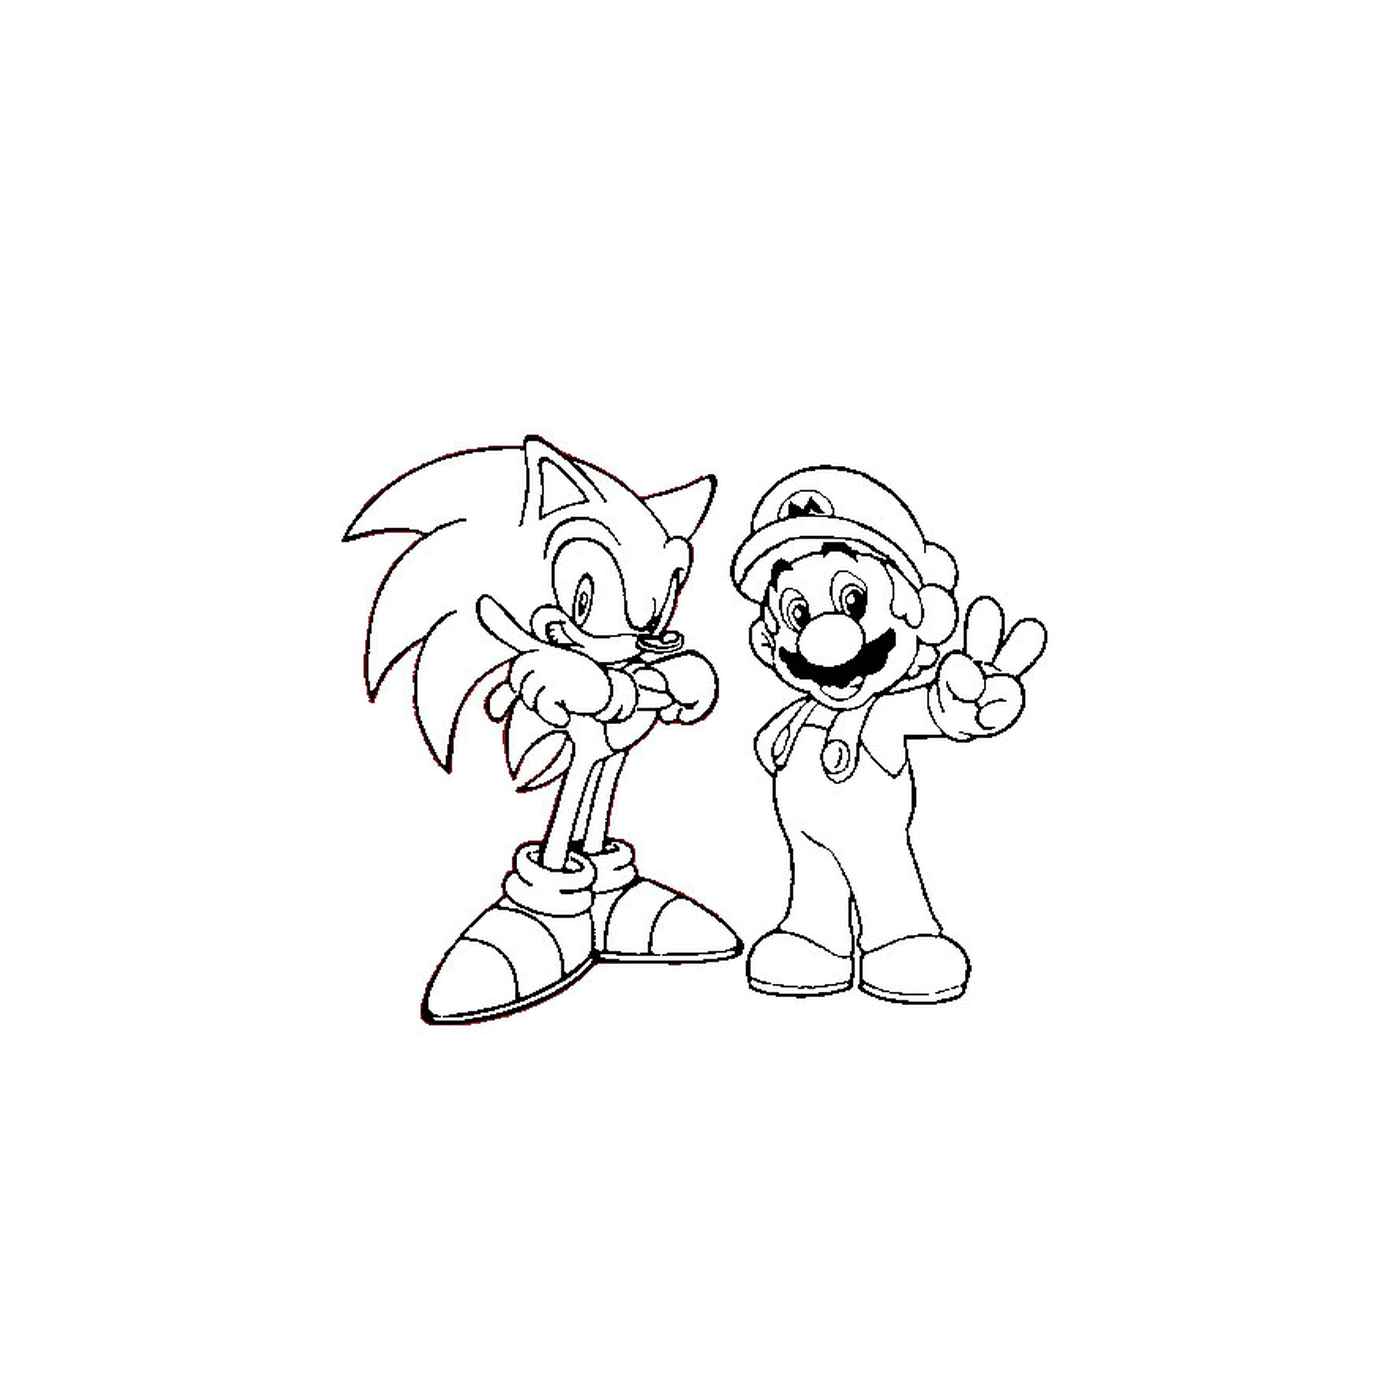  Mario e Sonic insieme 